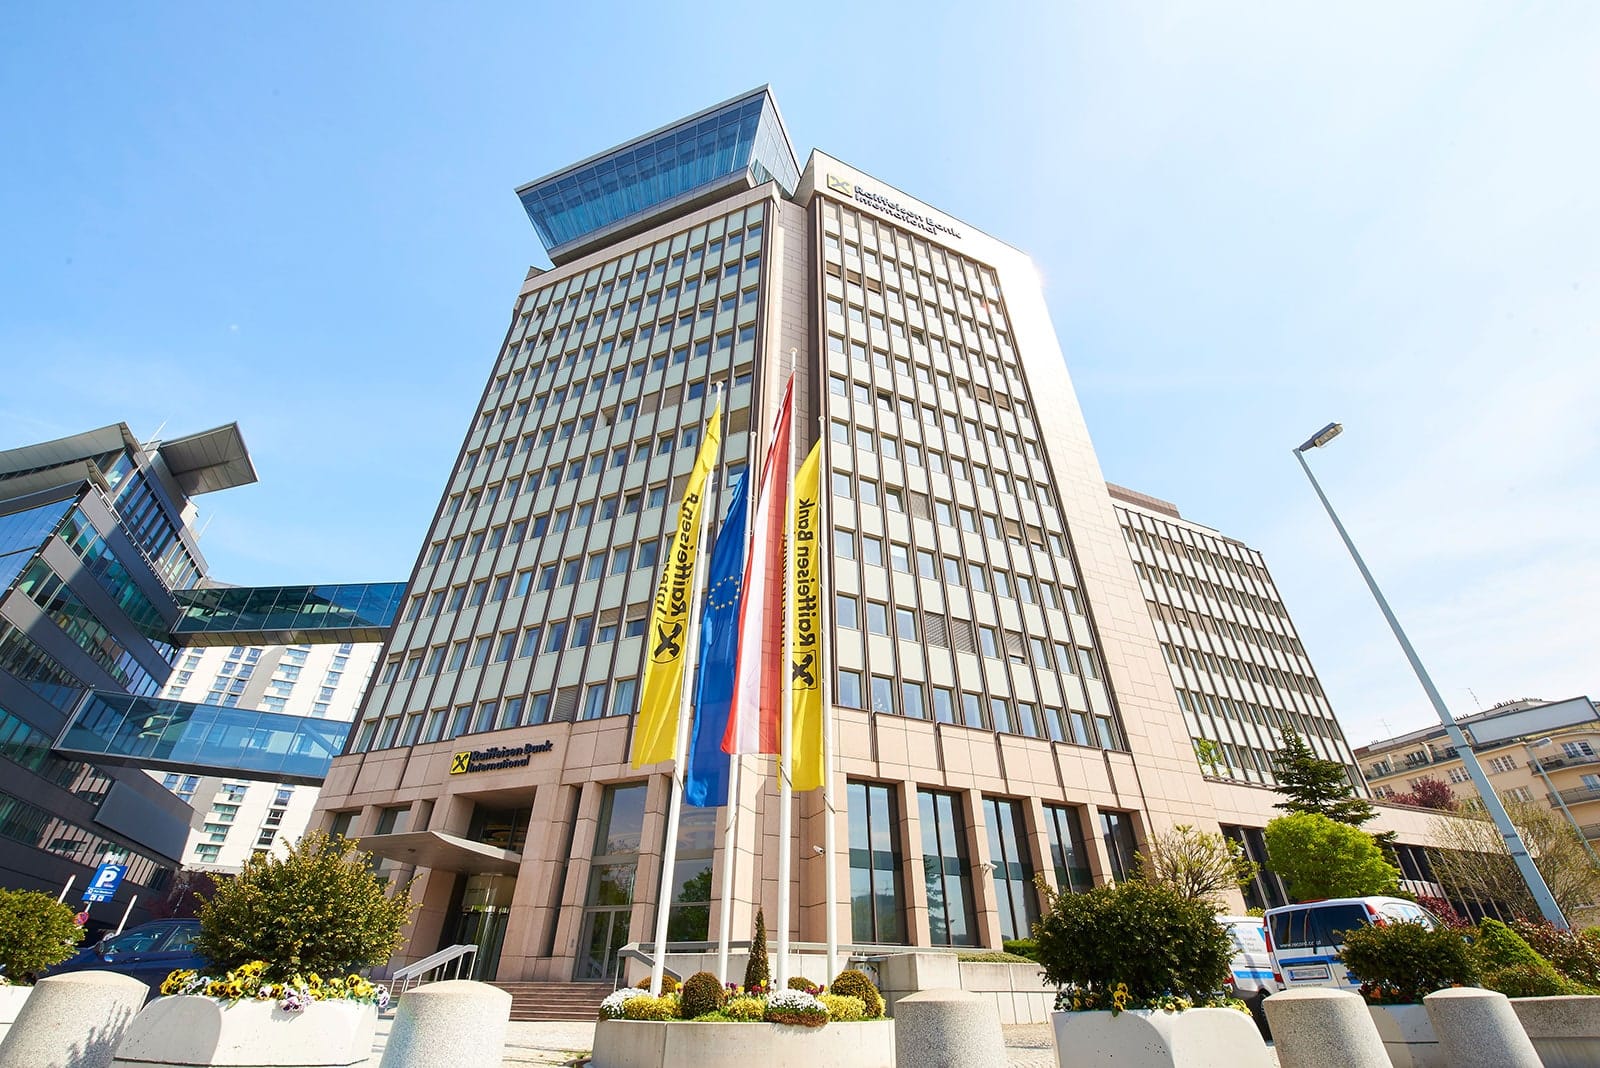 RBI Headquarter Wien